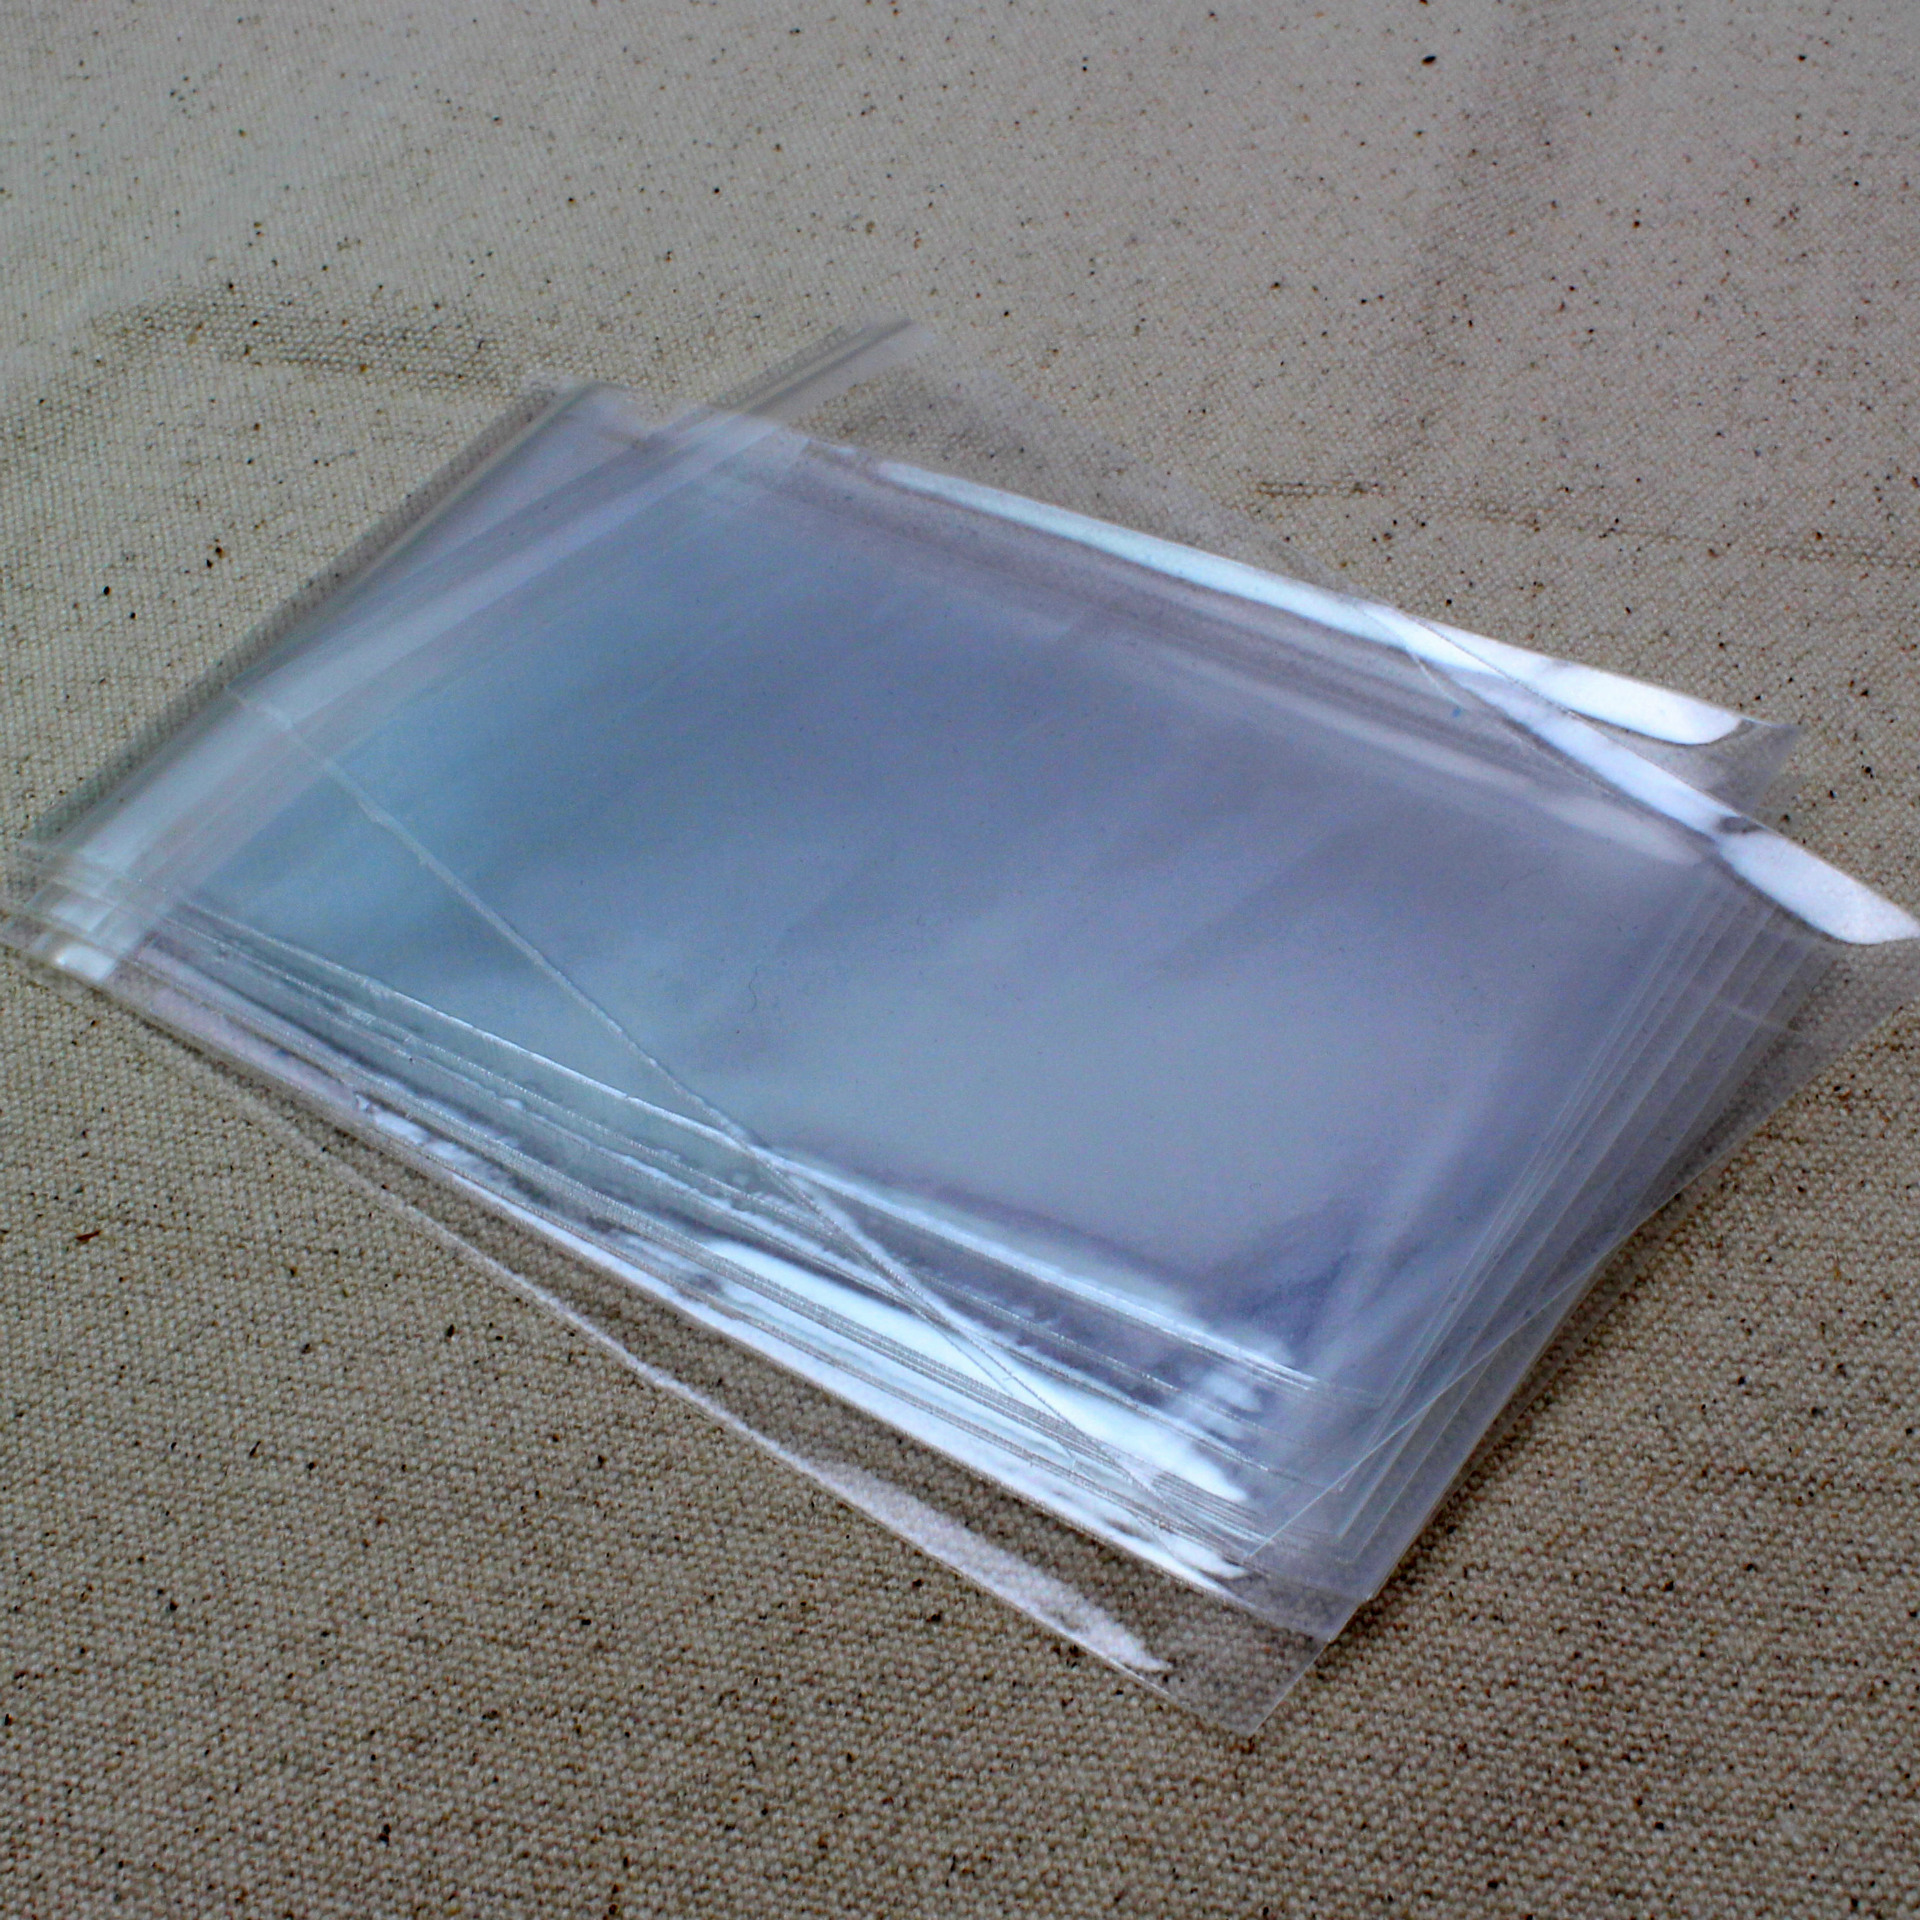 opp不干胶自粘袋包装袋 透明塑料袋 服装袋子 透明袋 自封图片